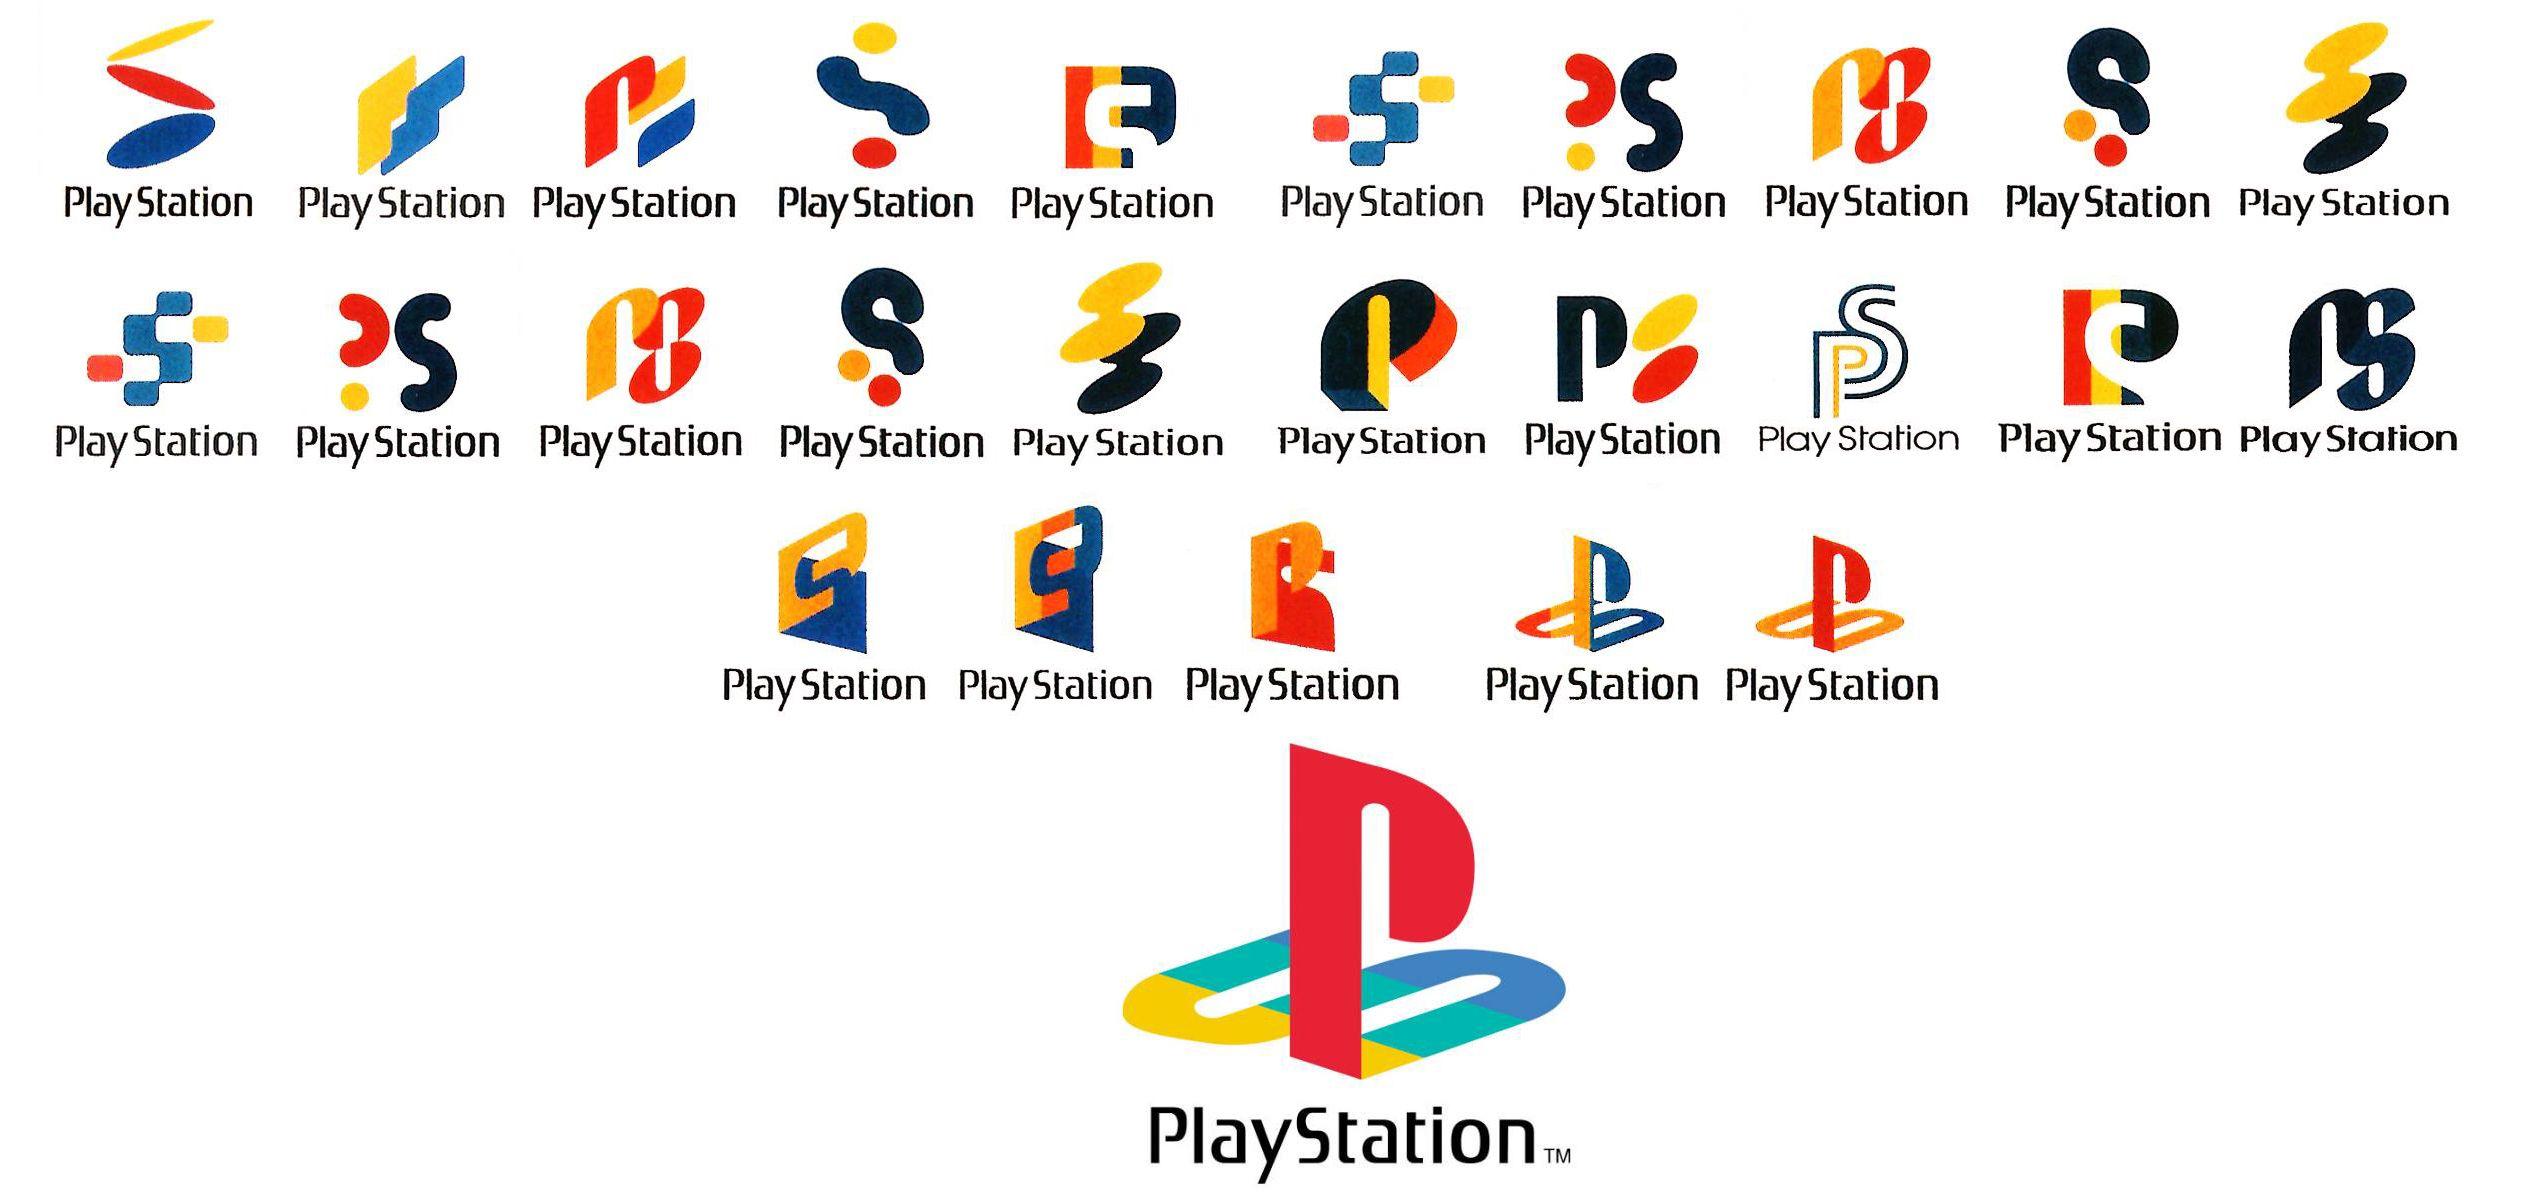 PS1 Logo - PlayStation Logo, PlayStation Symbol, History and Evolution